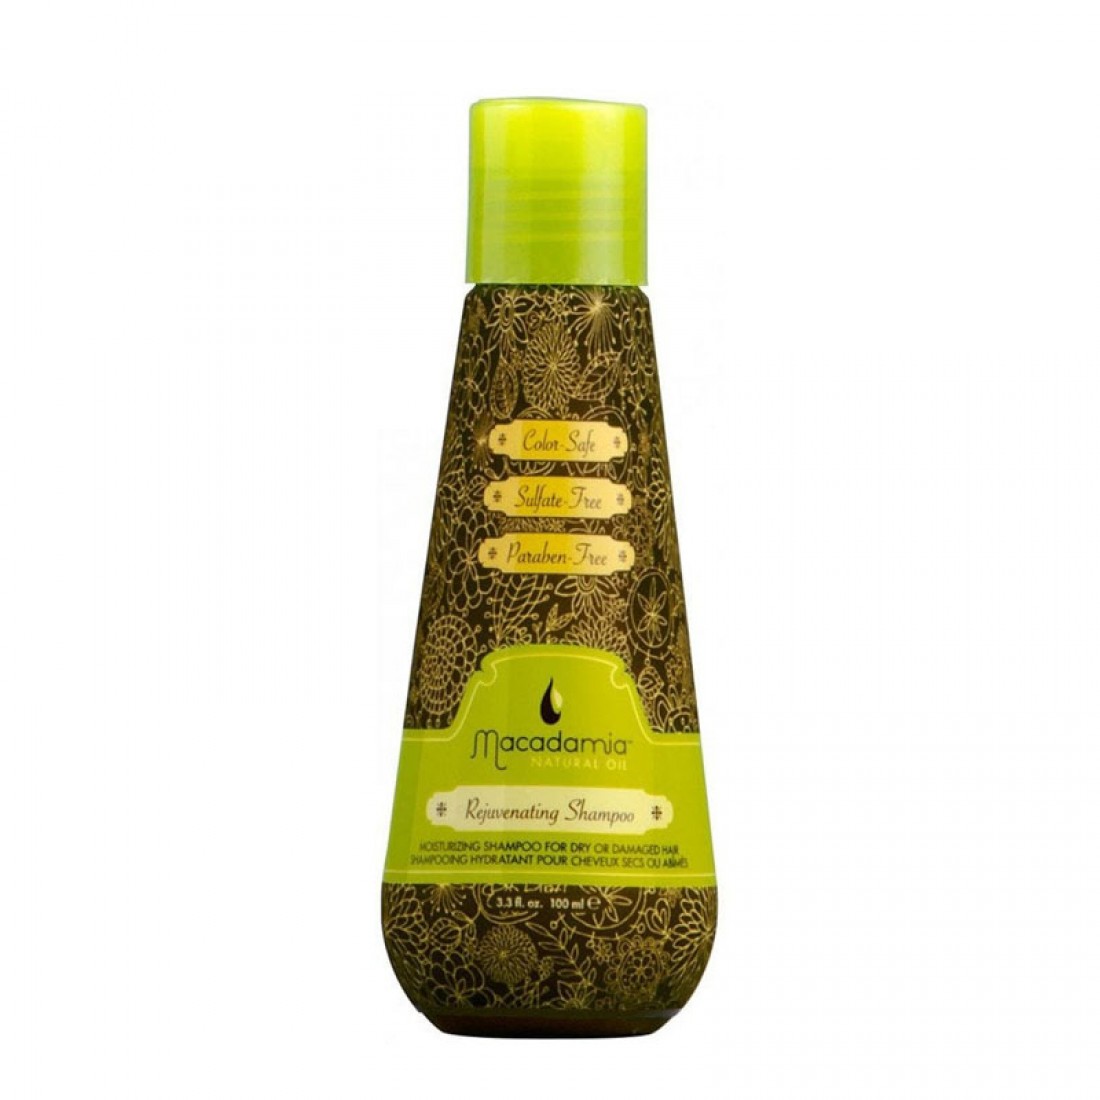 Macadamia natural oil shampoo